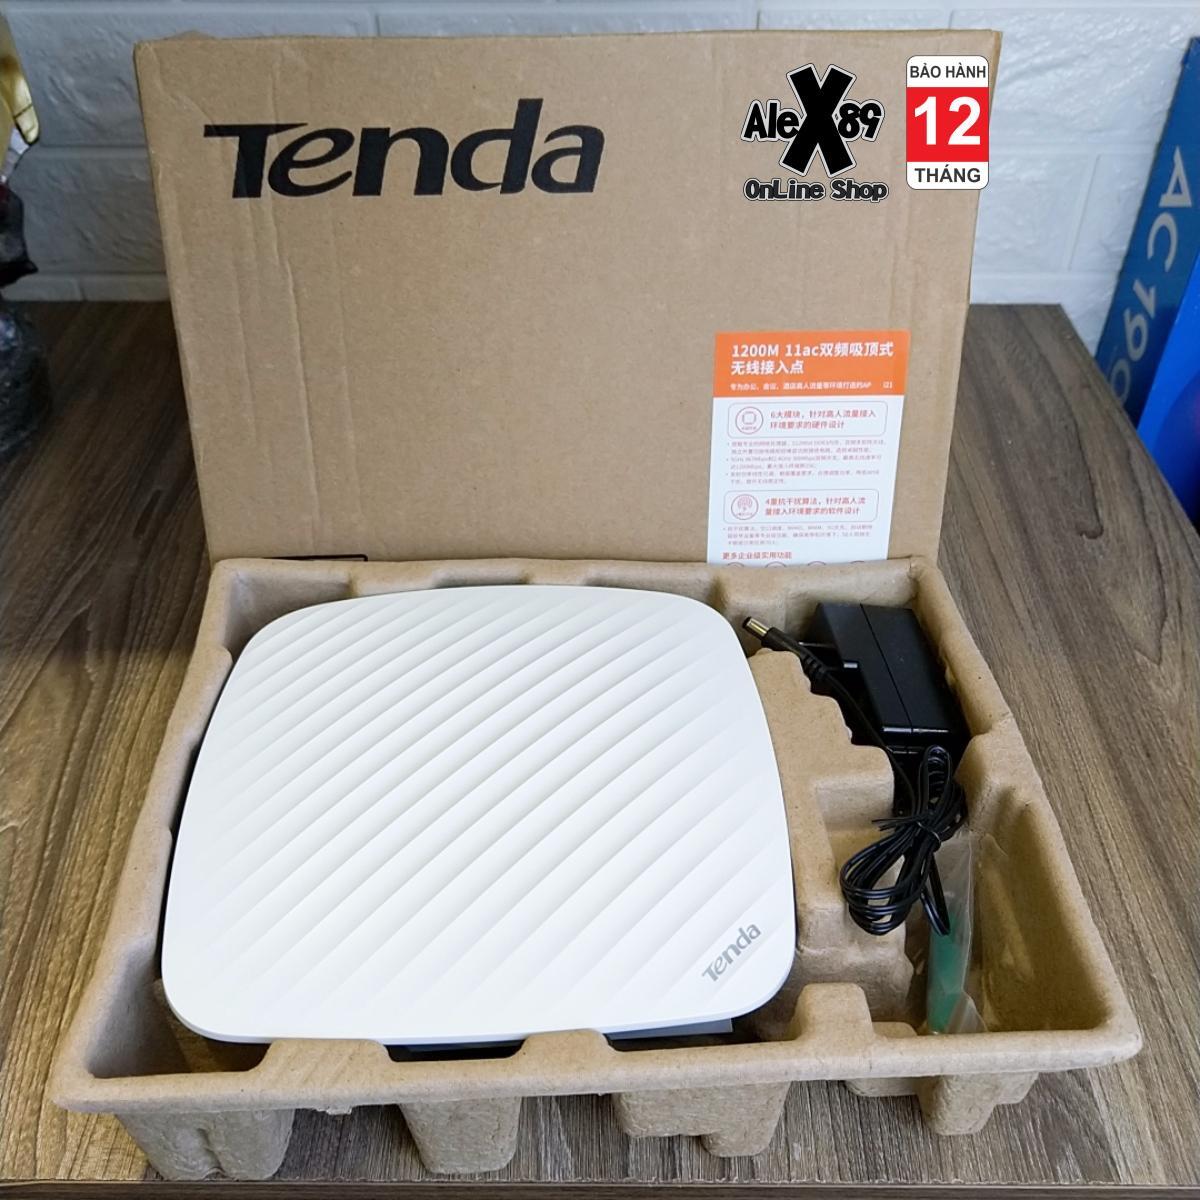 Router - Bộ phát wifi Tenda i21